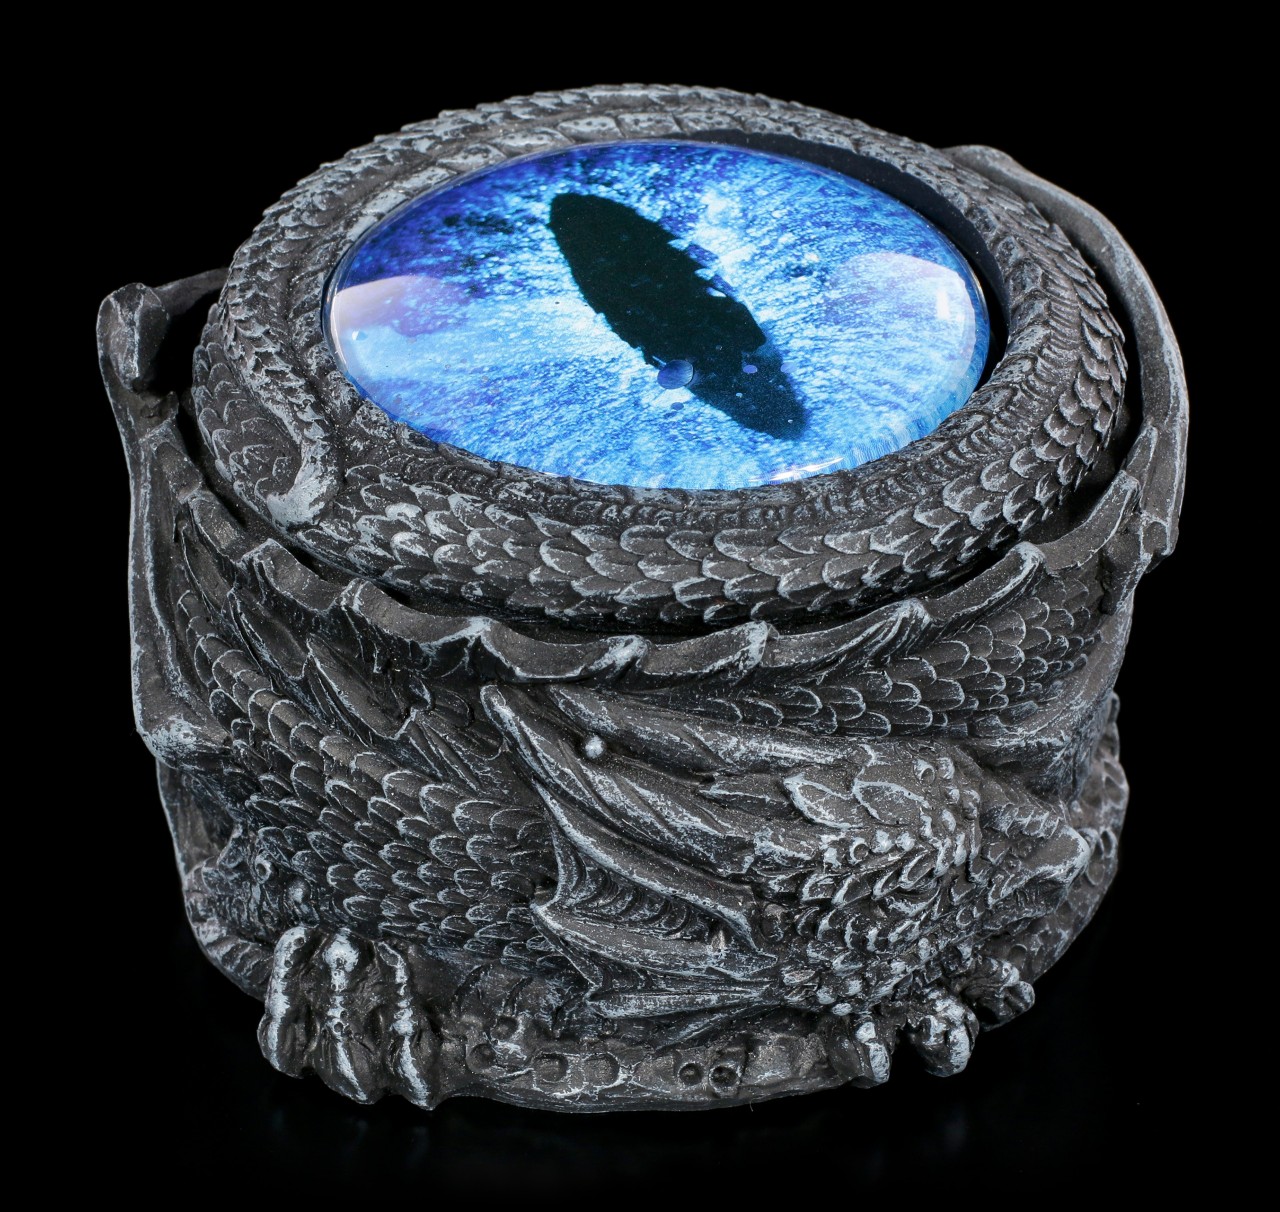 Drachen Auge Schatulle - Ice Dragon